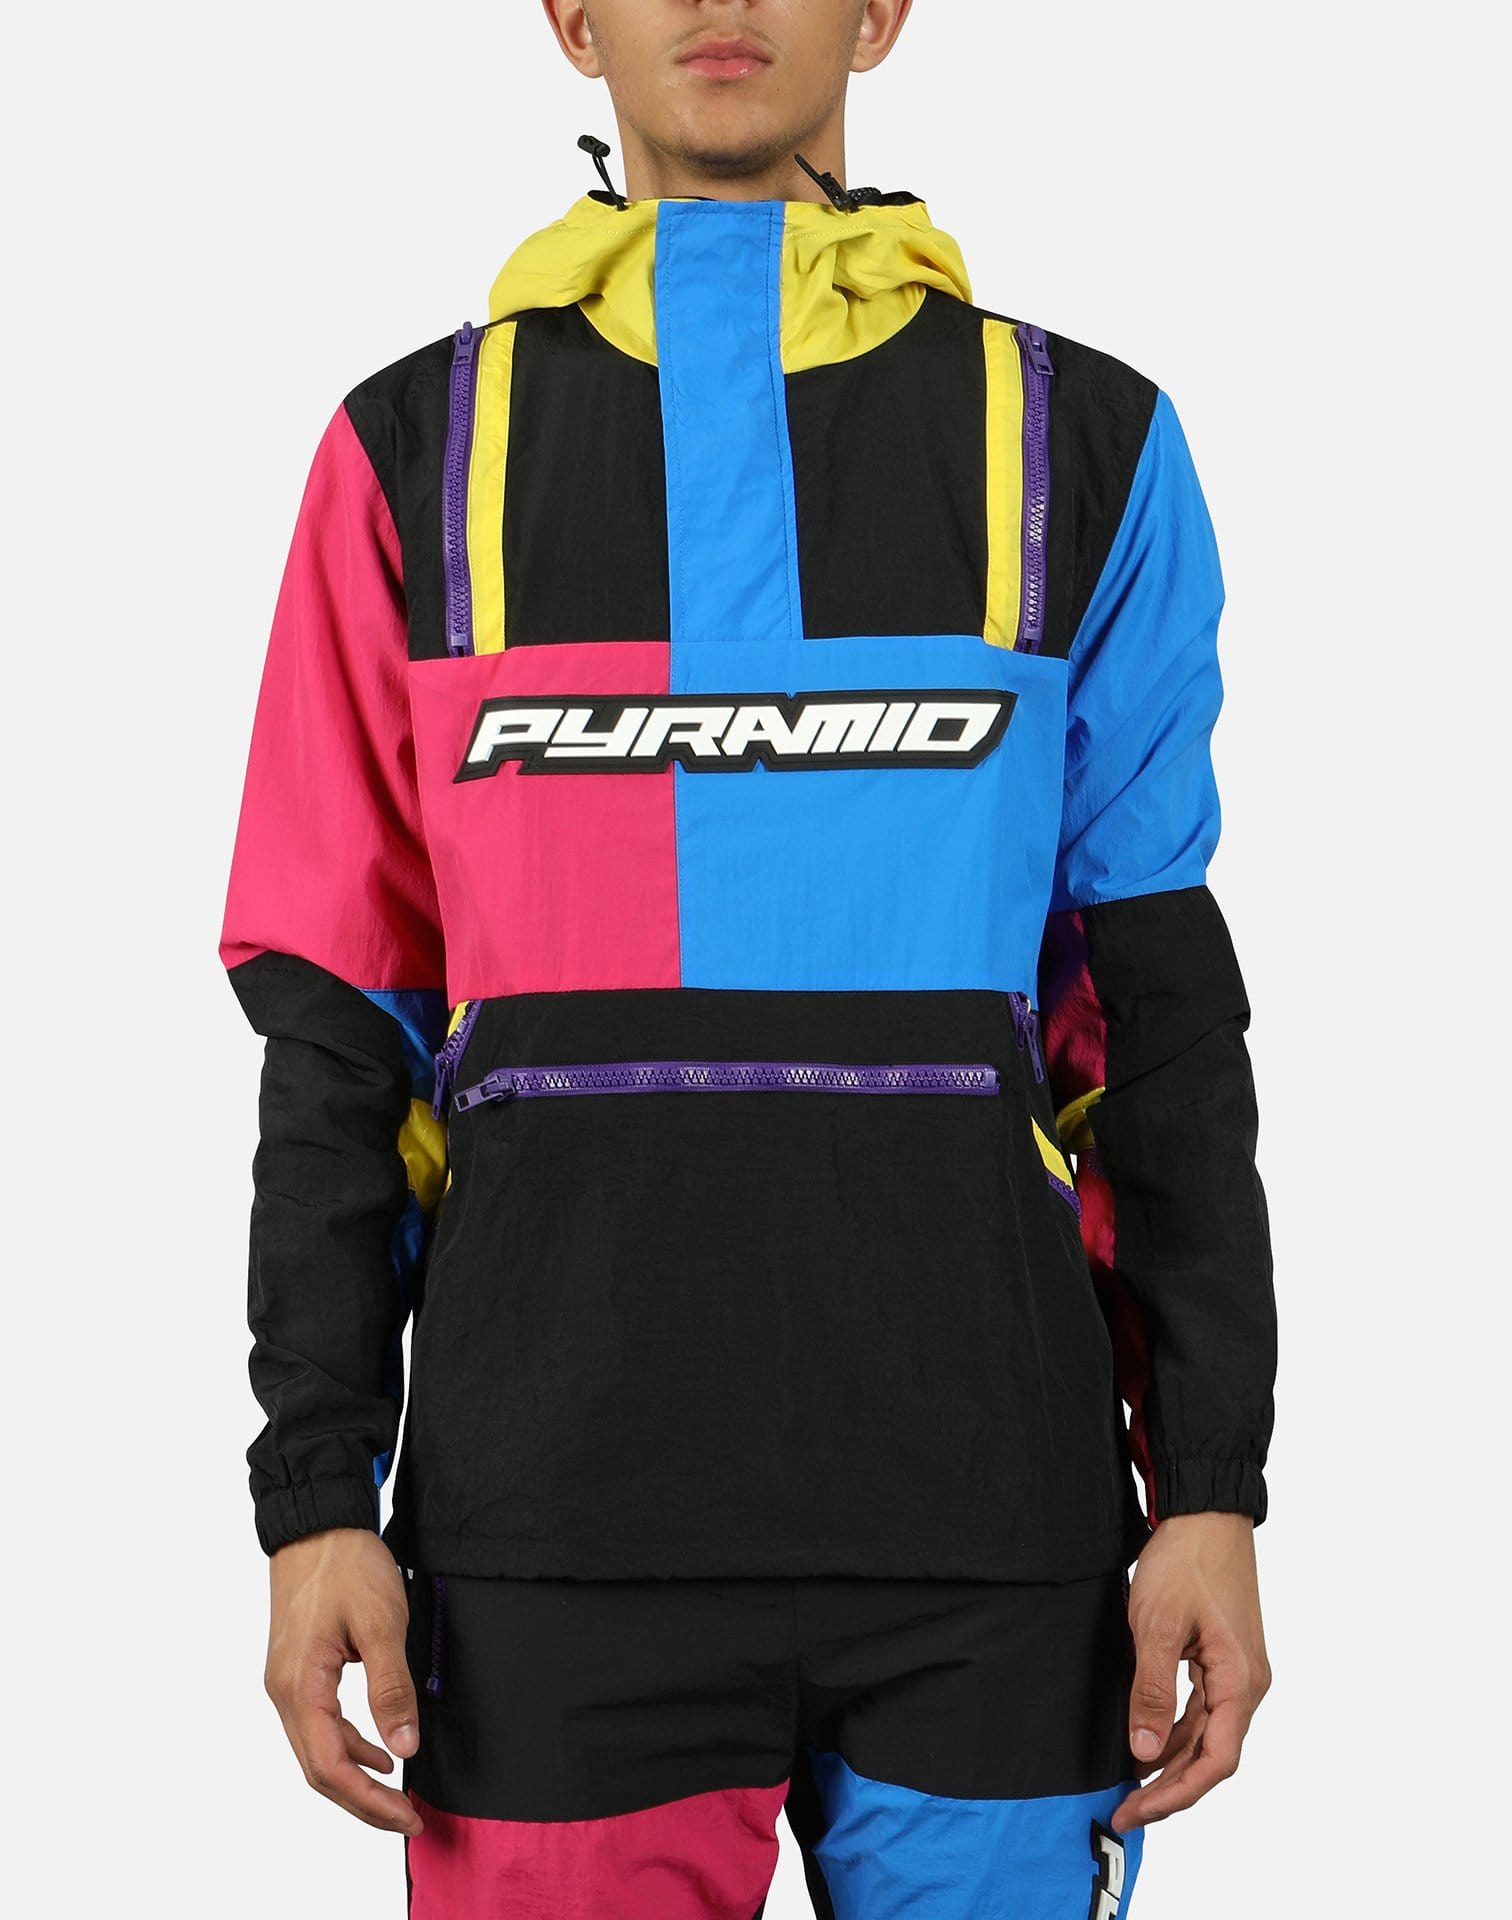 Black Pyramid Men's Tech Colorblock Pullover Jacket